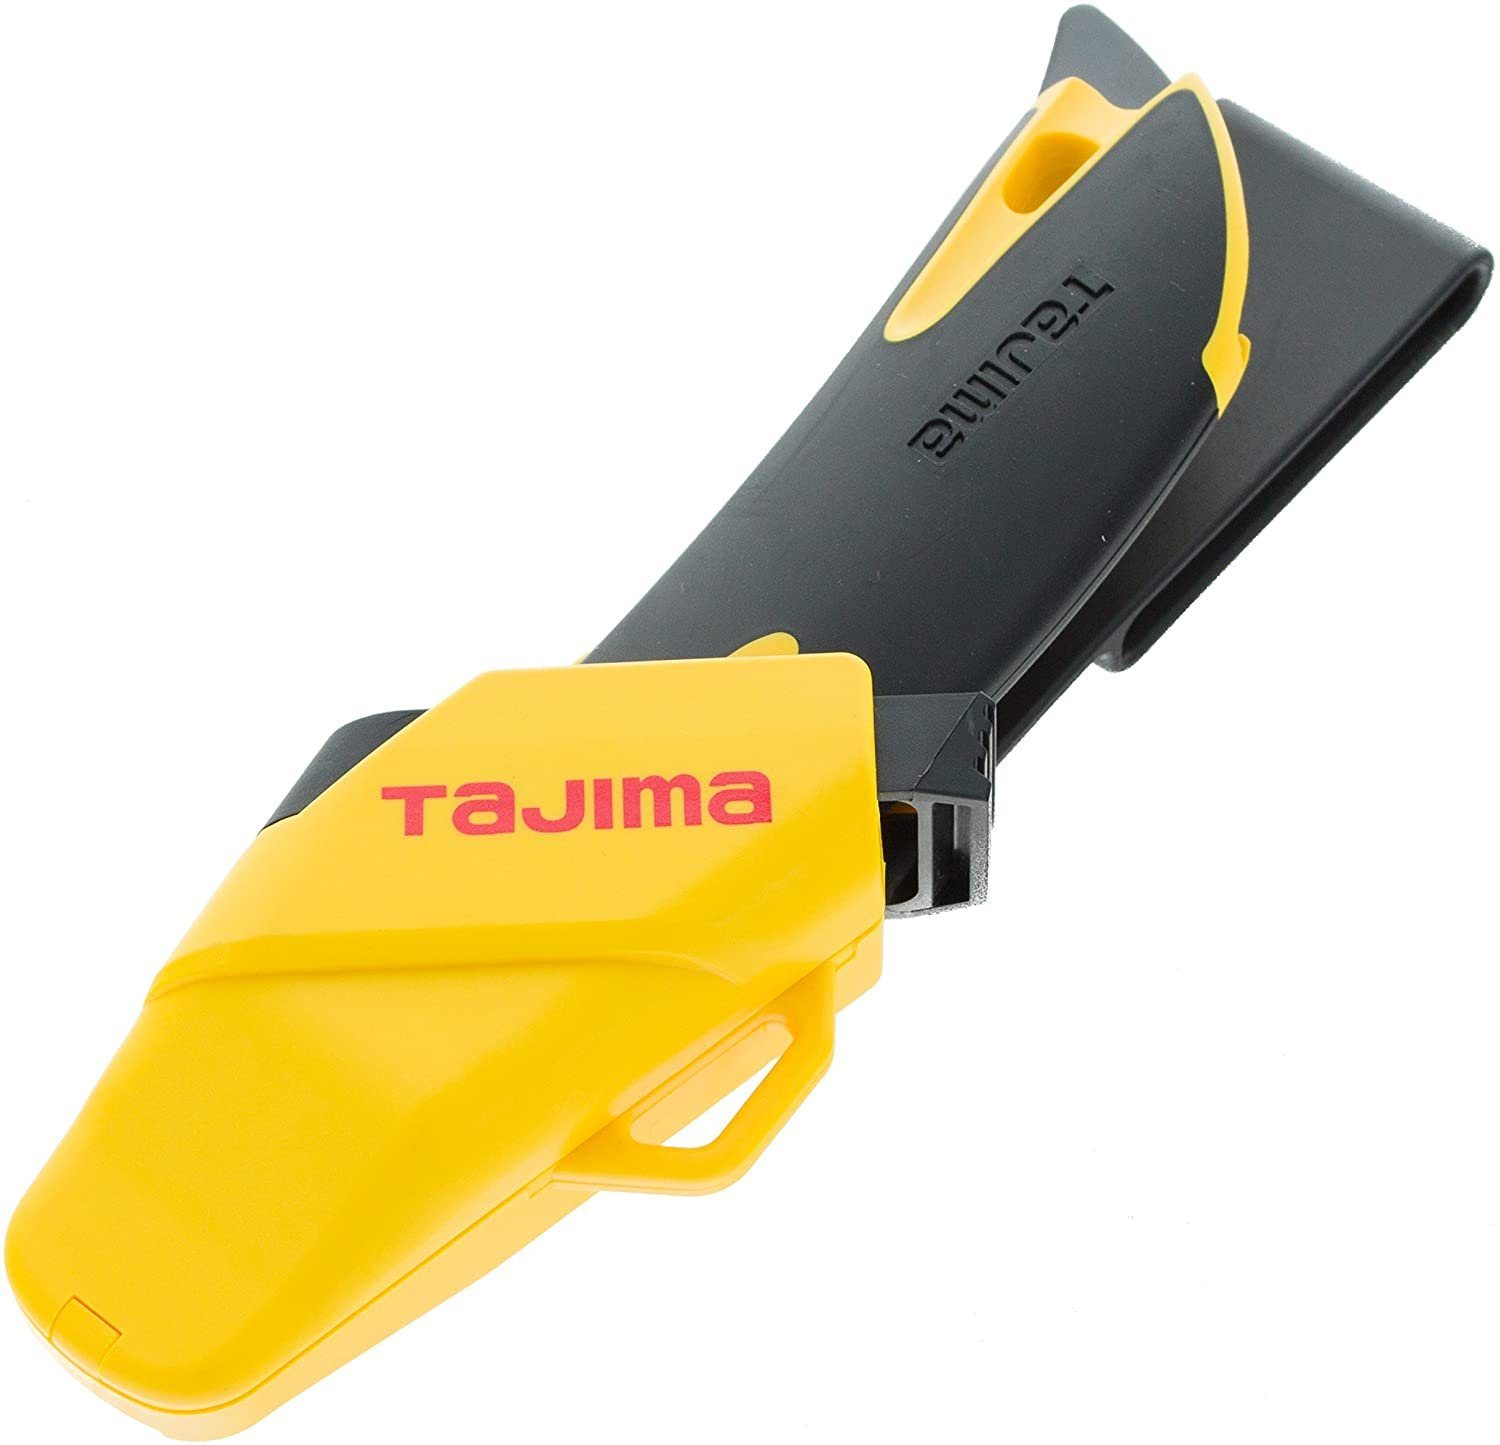 Tajima-Quick-Back Cutter automatischer der DFC569B Driver Tajima Cutter18mm, Rückzug Klinge